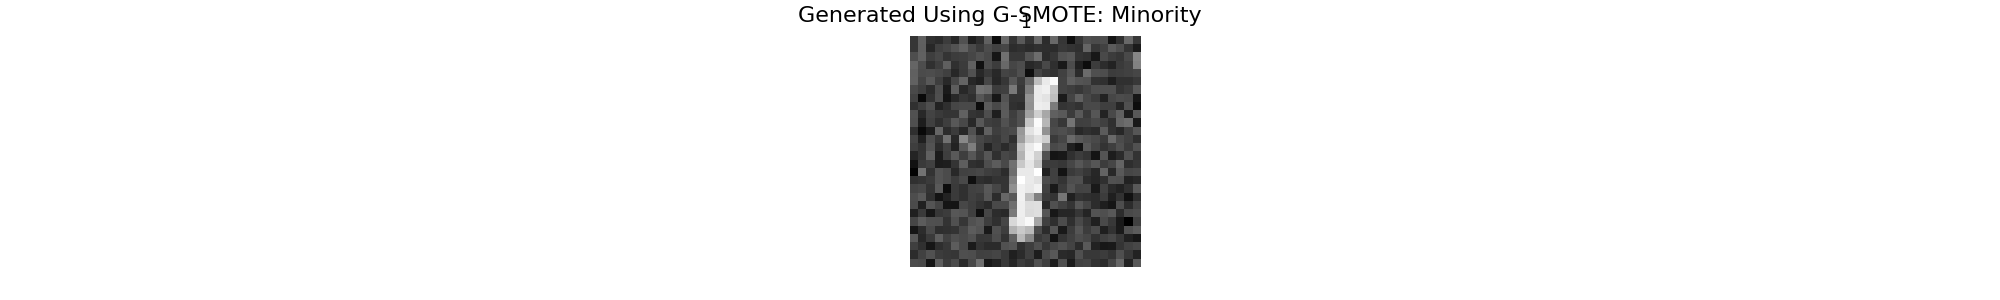 Generated Using G-SMOTE: Minority, 1